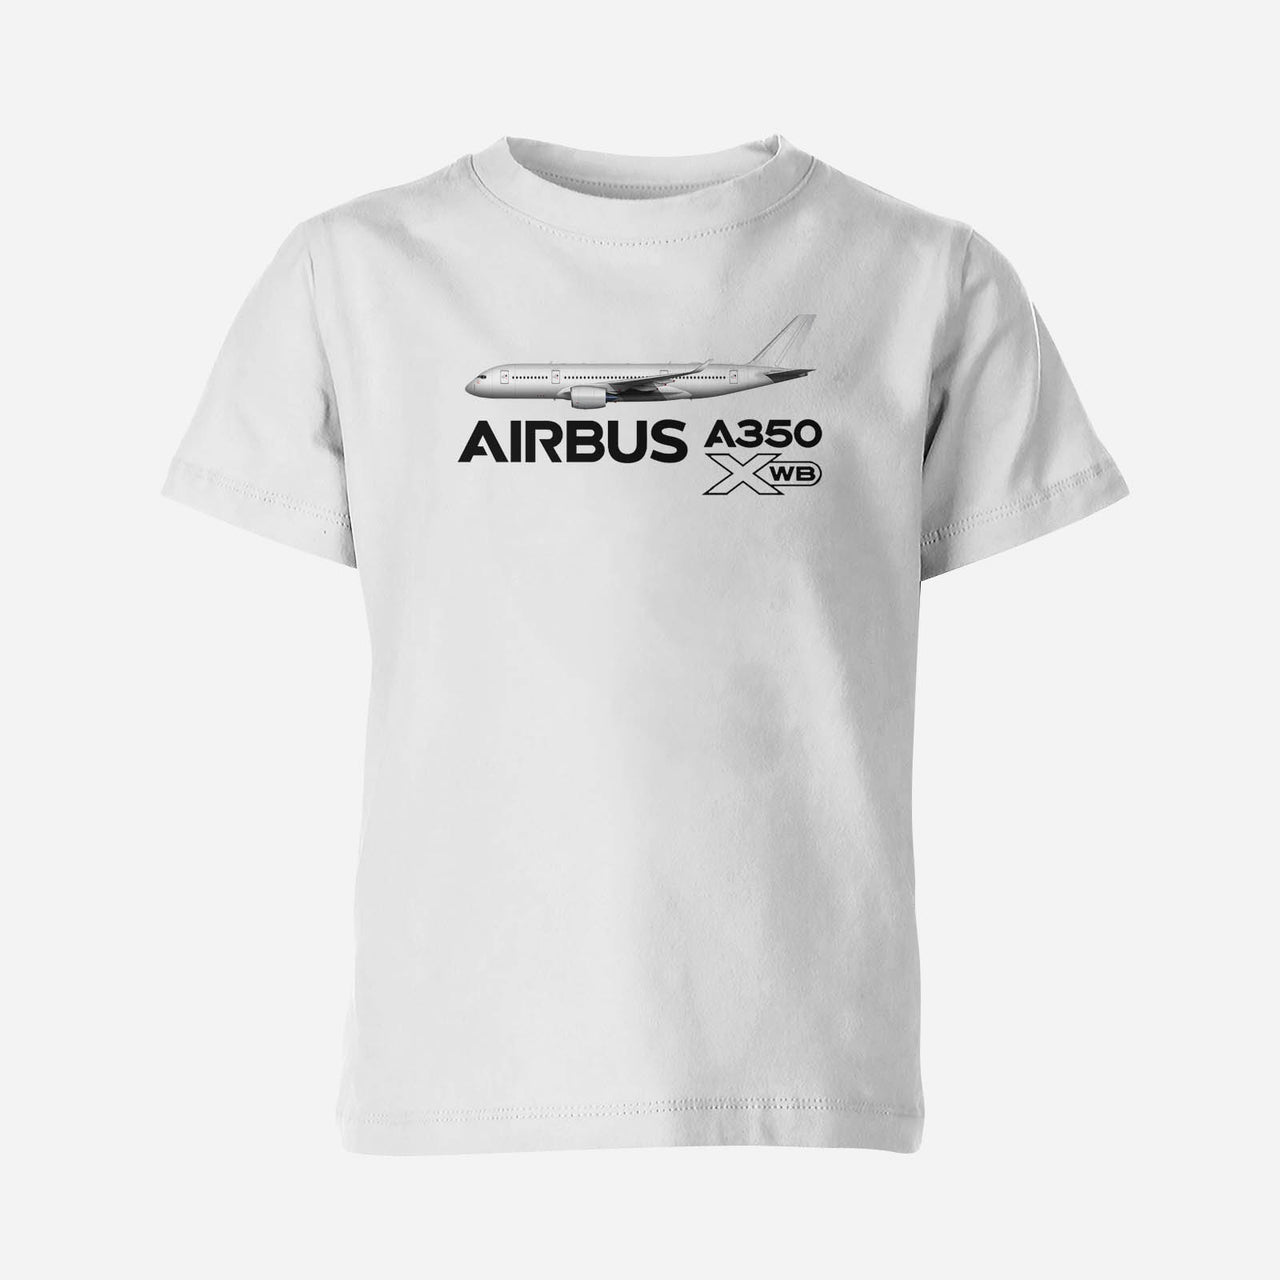 The Airbus A350 XWB Designed Children T-Shirts